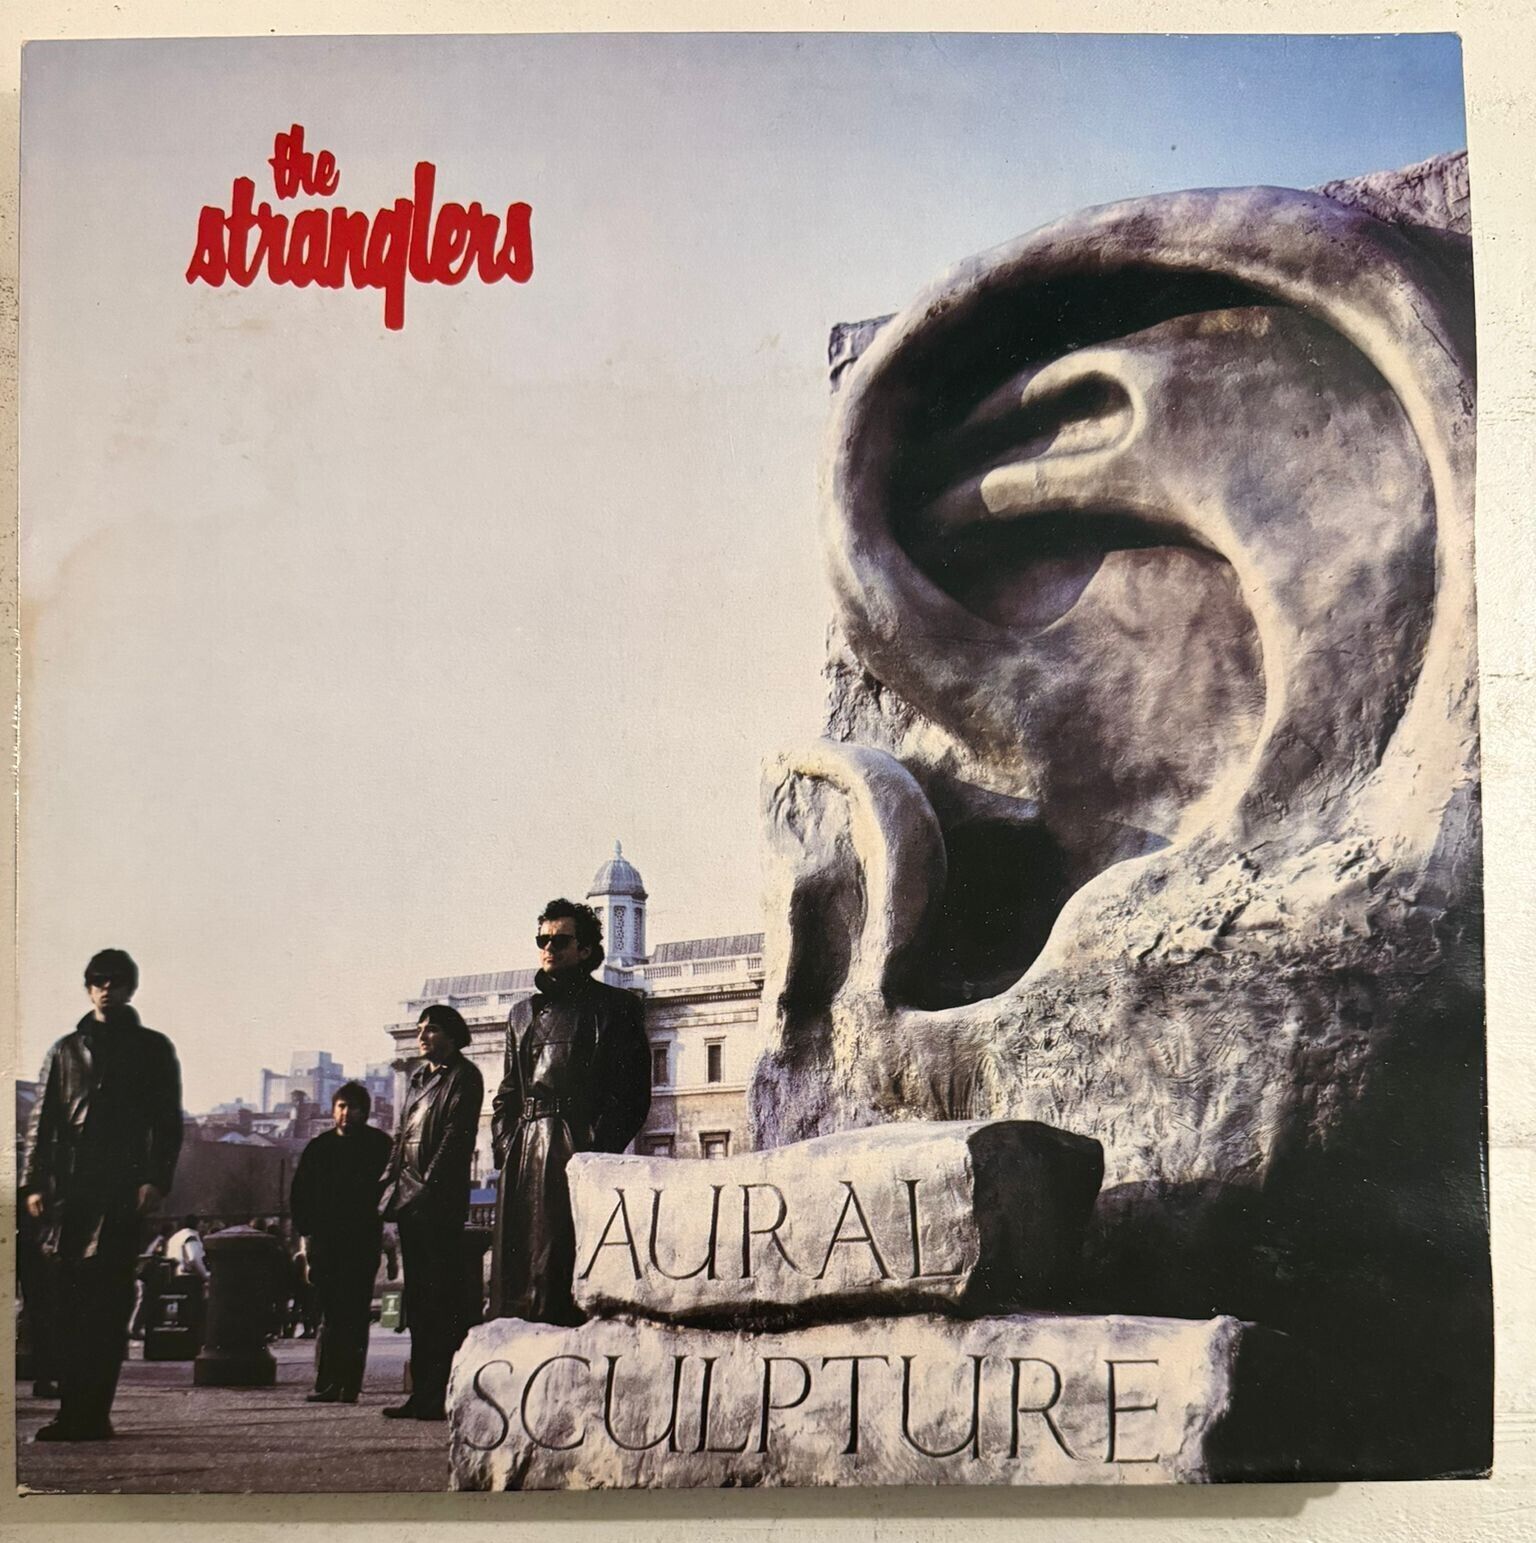 THE STRANGLERS – AURAL SCULPTURE - EPC 4504481 VINYL LP 1984 CBS - VG+ - 6033